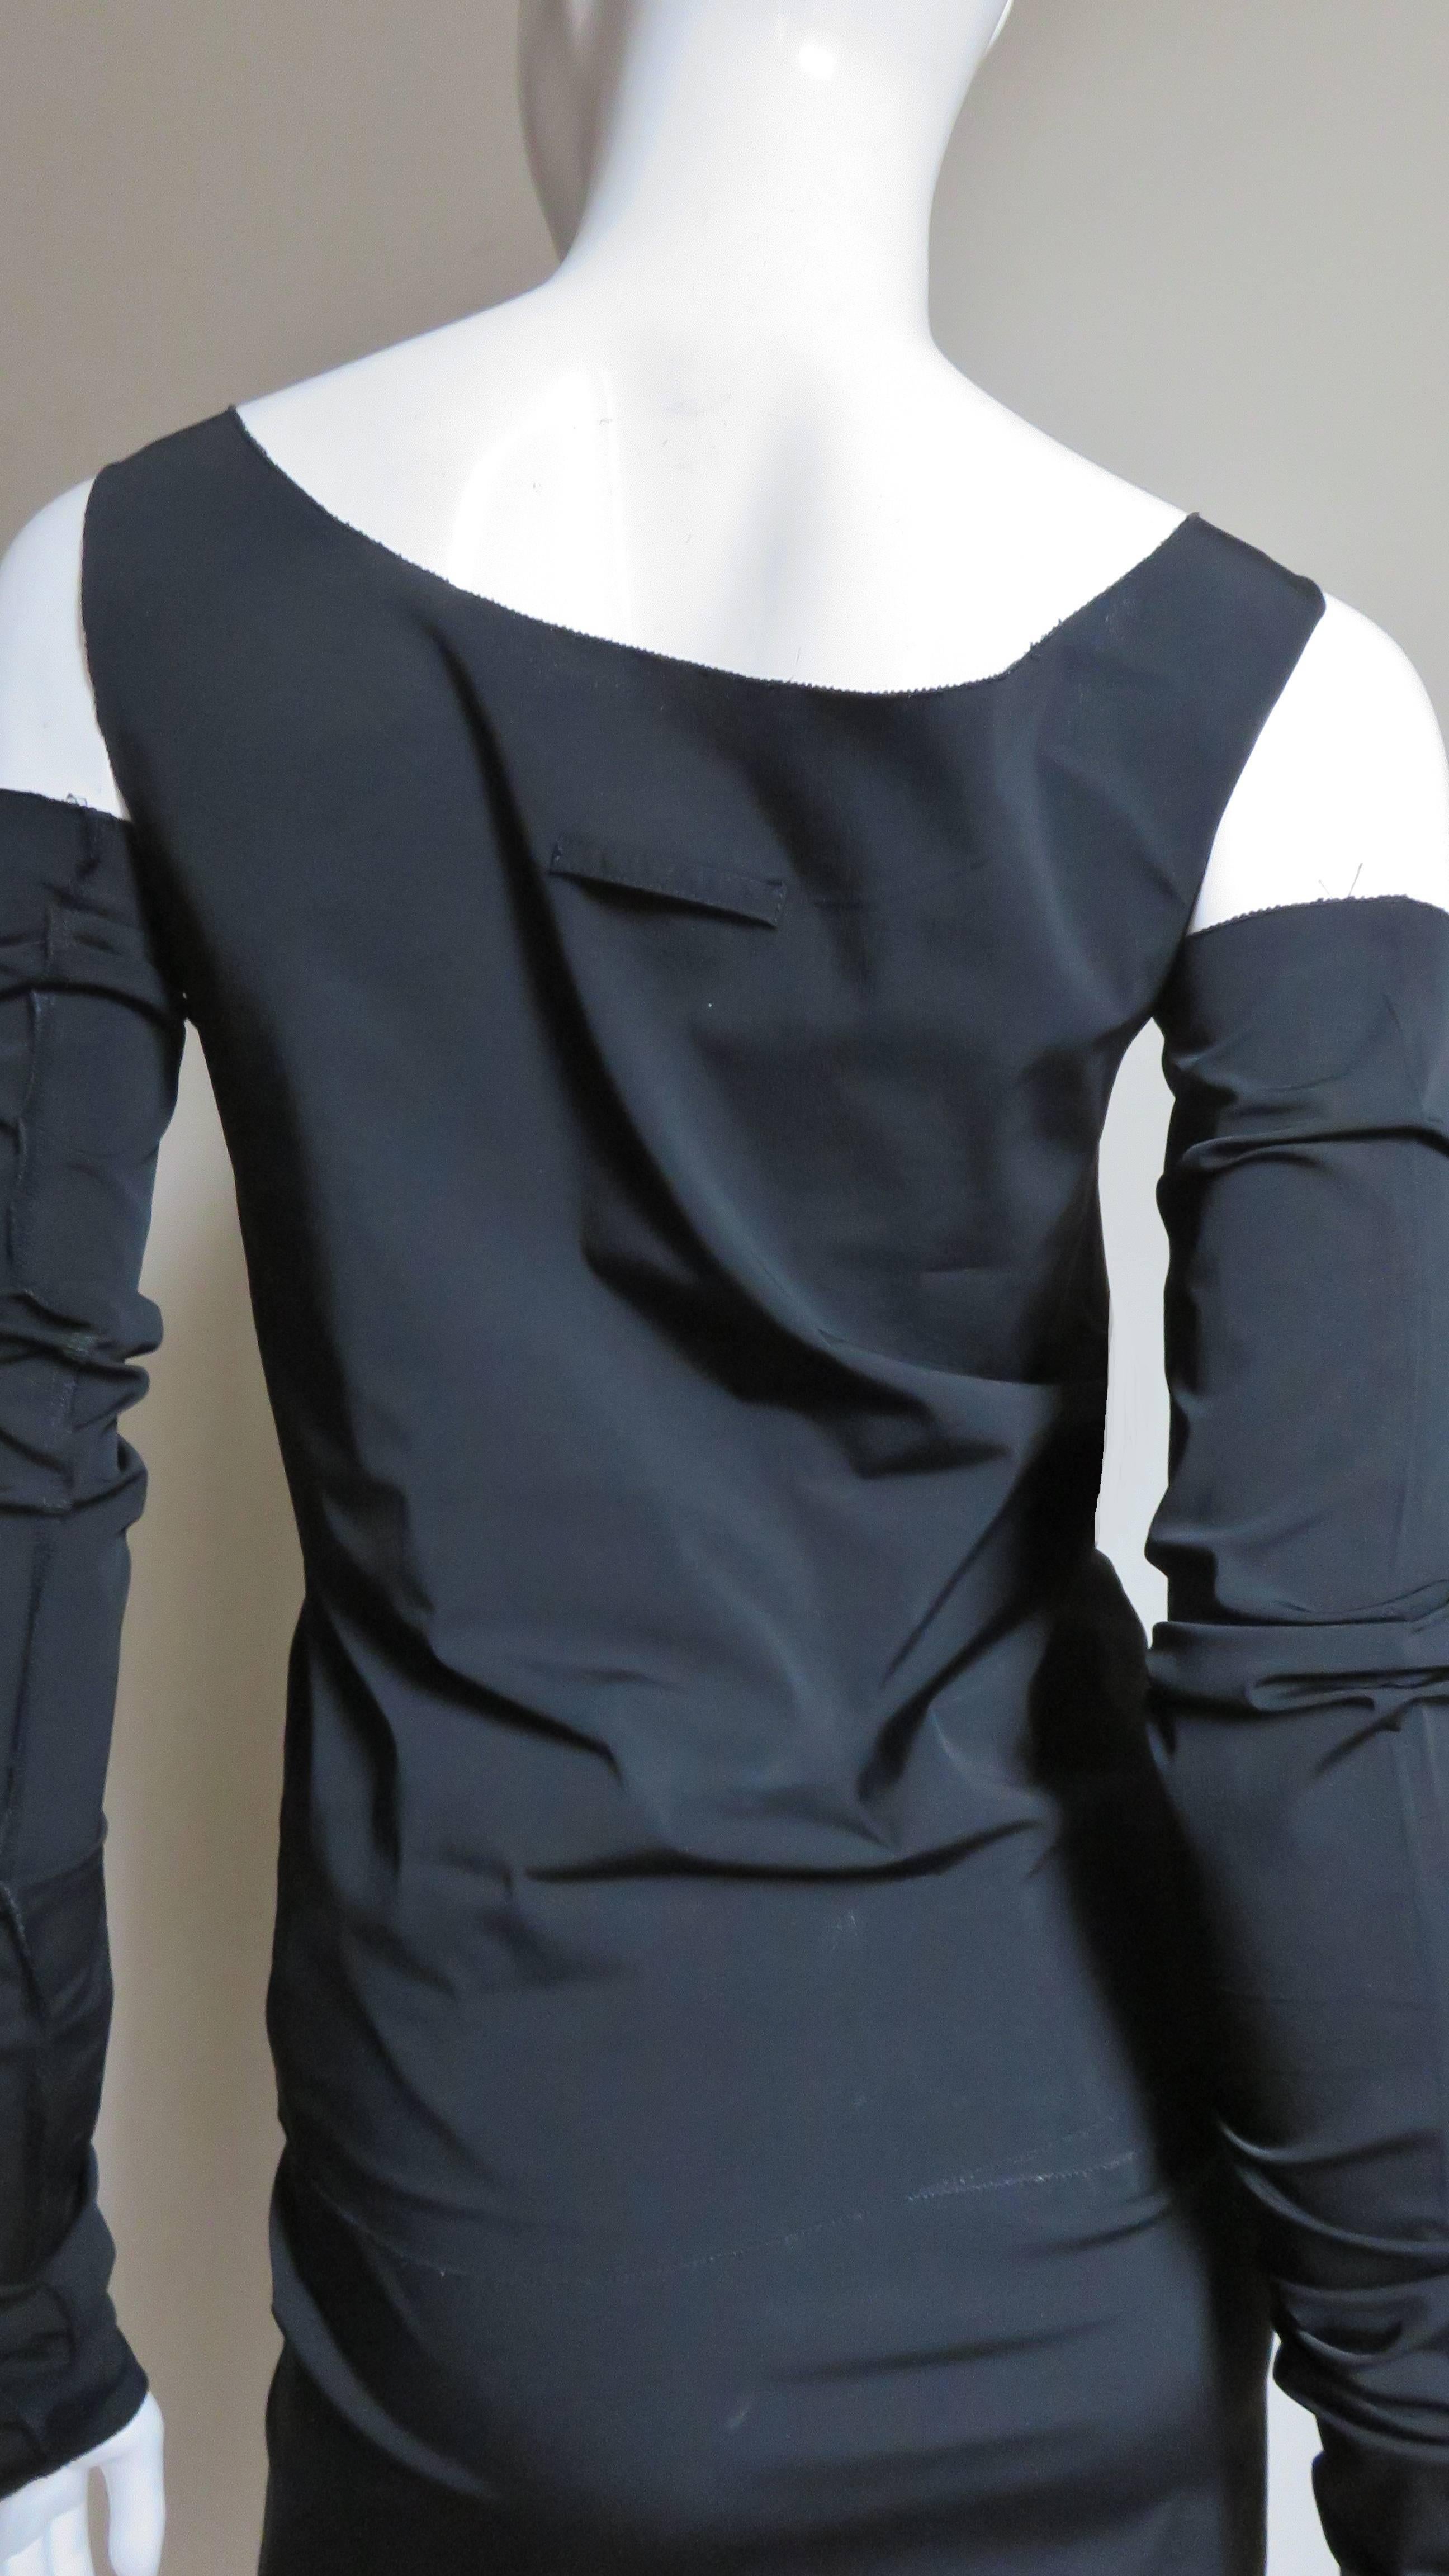 Jean Paul Gaultier Top, Skirt and Sleeves 3